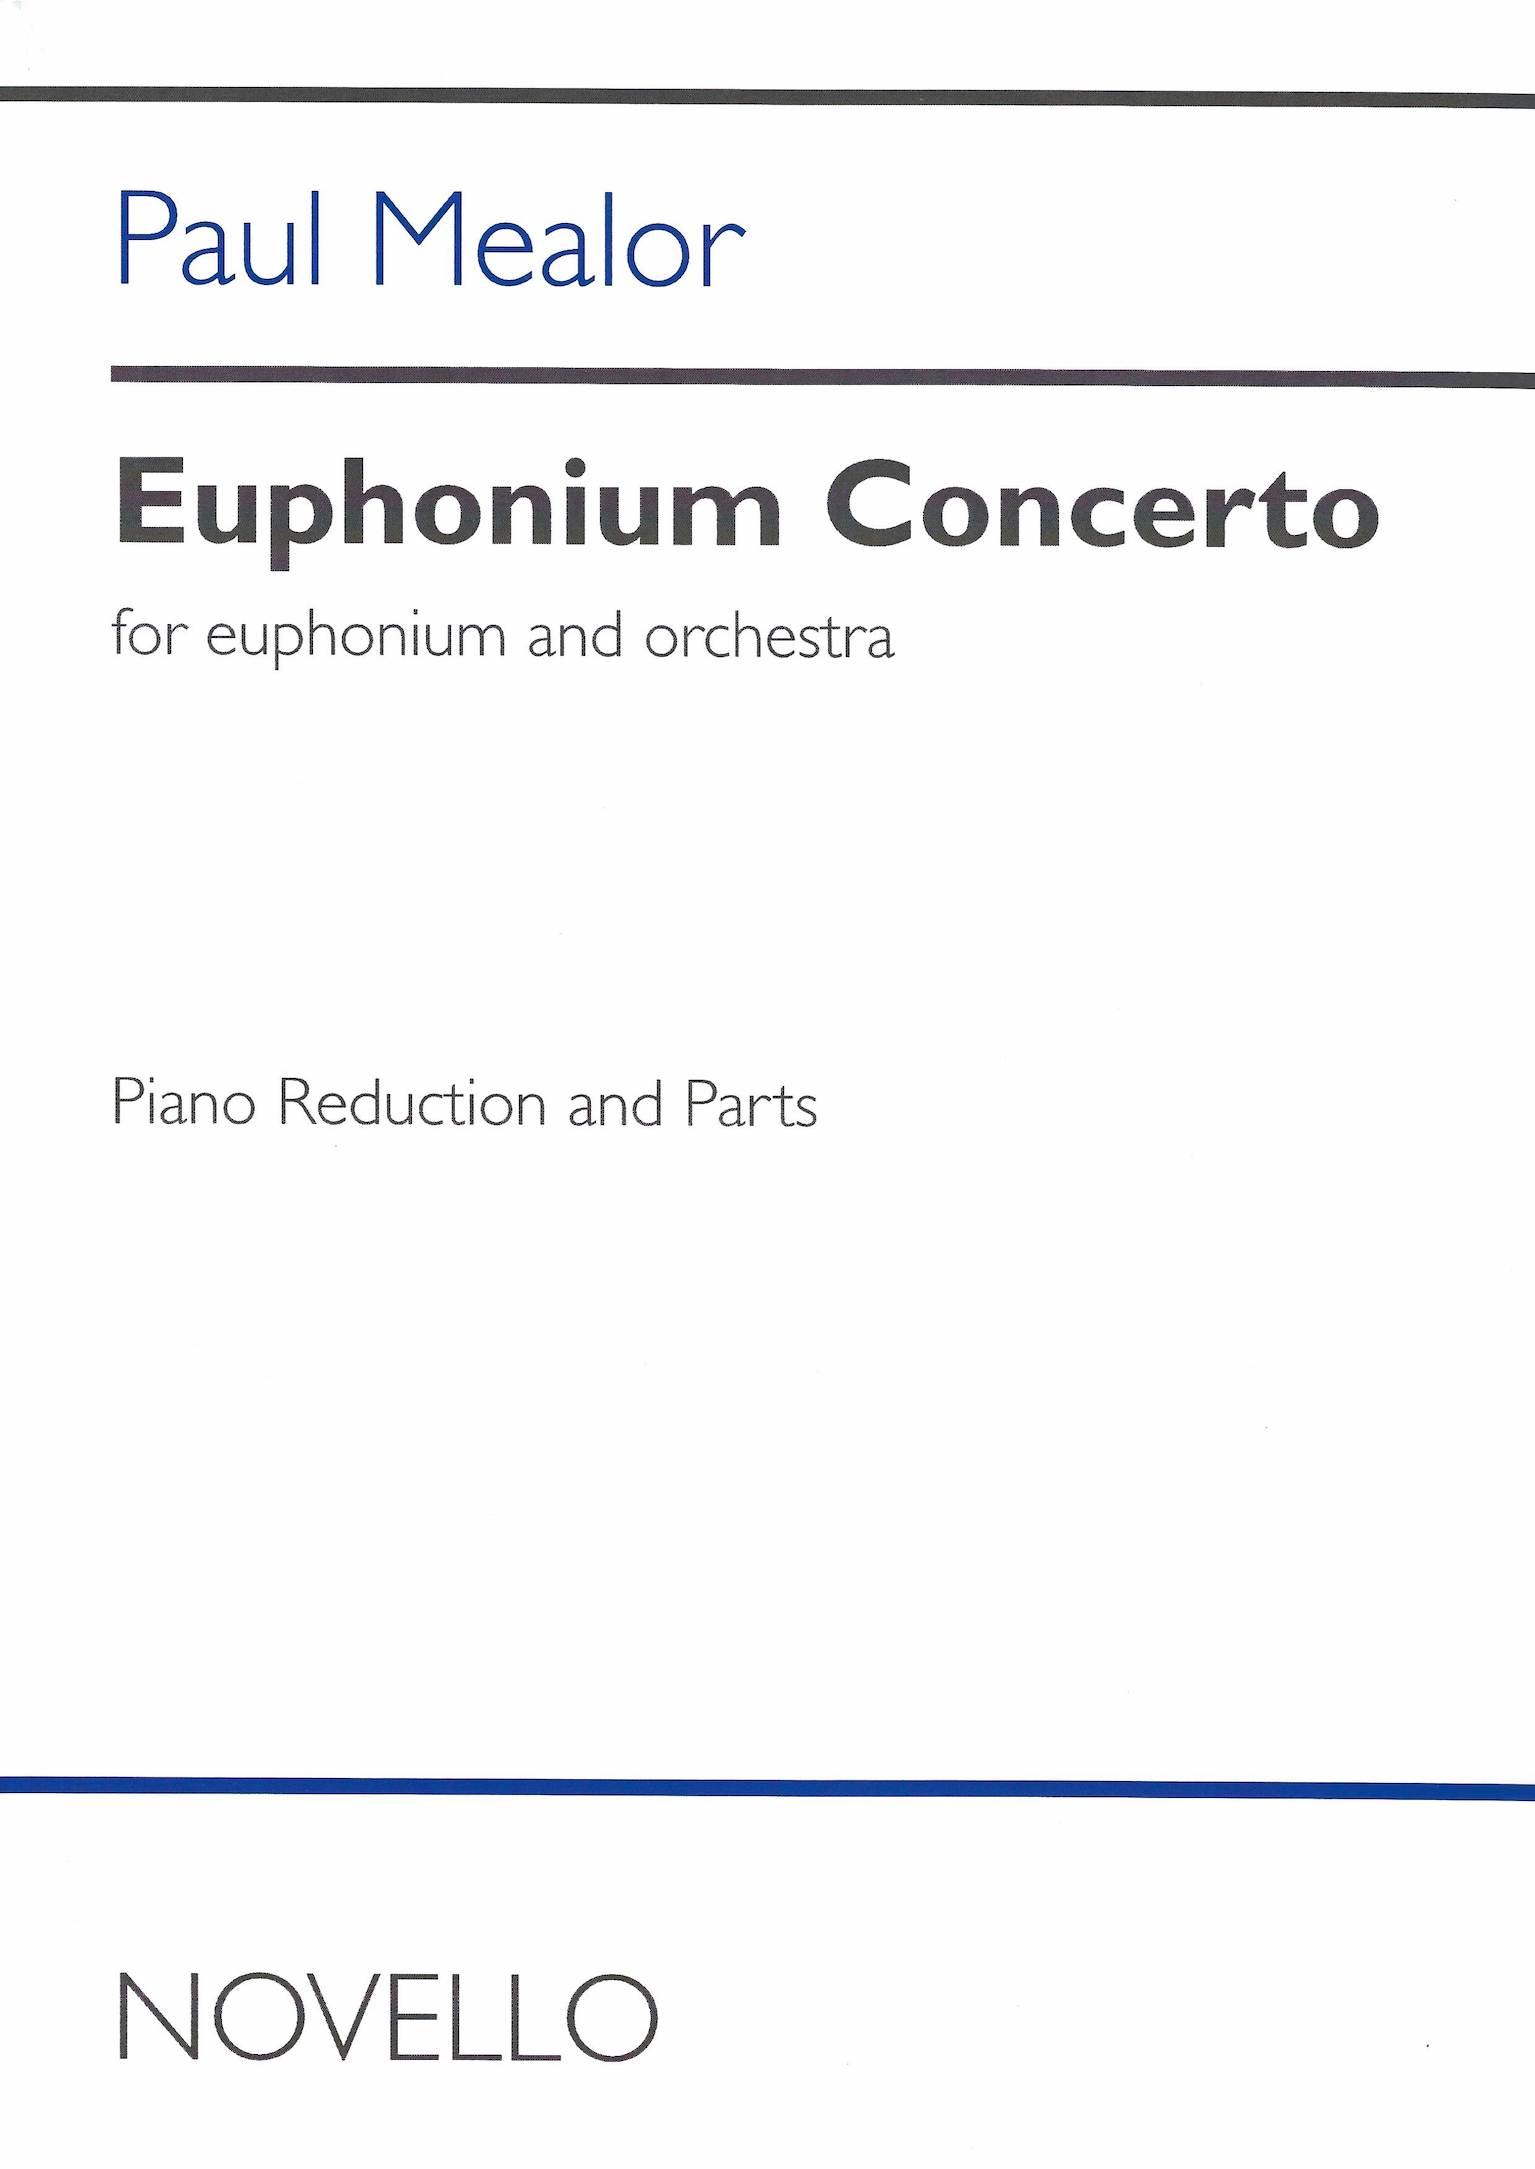 Euphonium Concerto - Paul Mealor - Euphonium and Piano